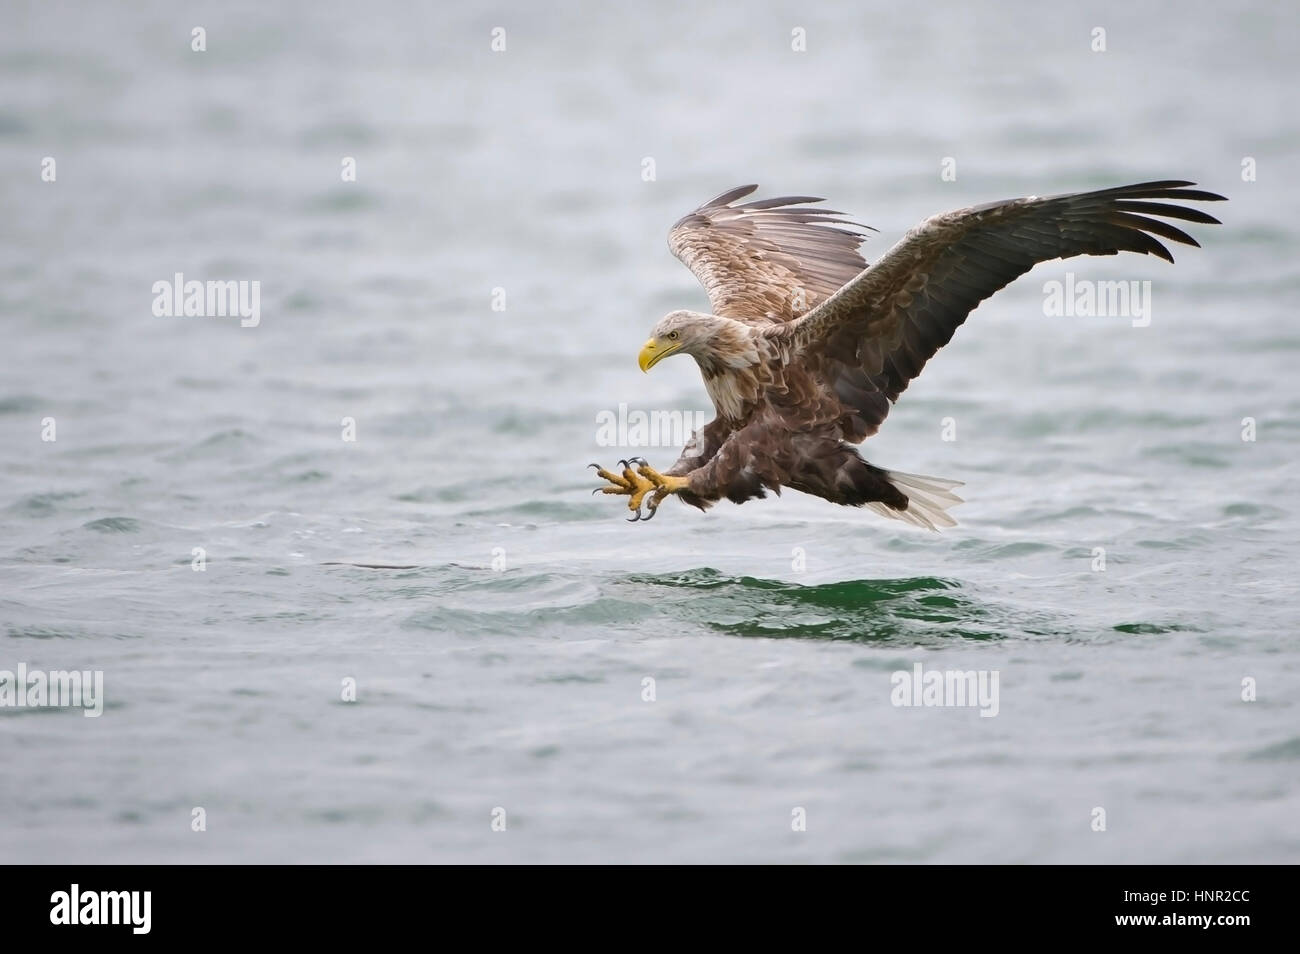 Sea eagle on food search, Seeadler auf Nahrungssuche Stock Photo